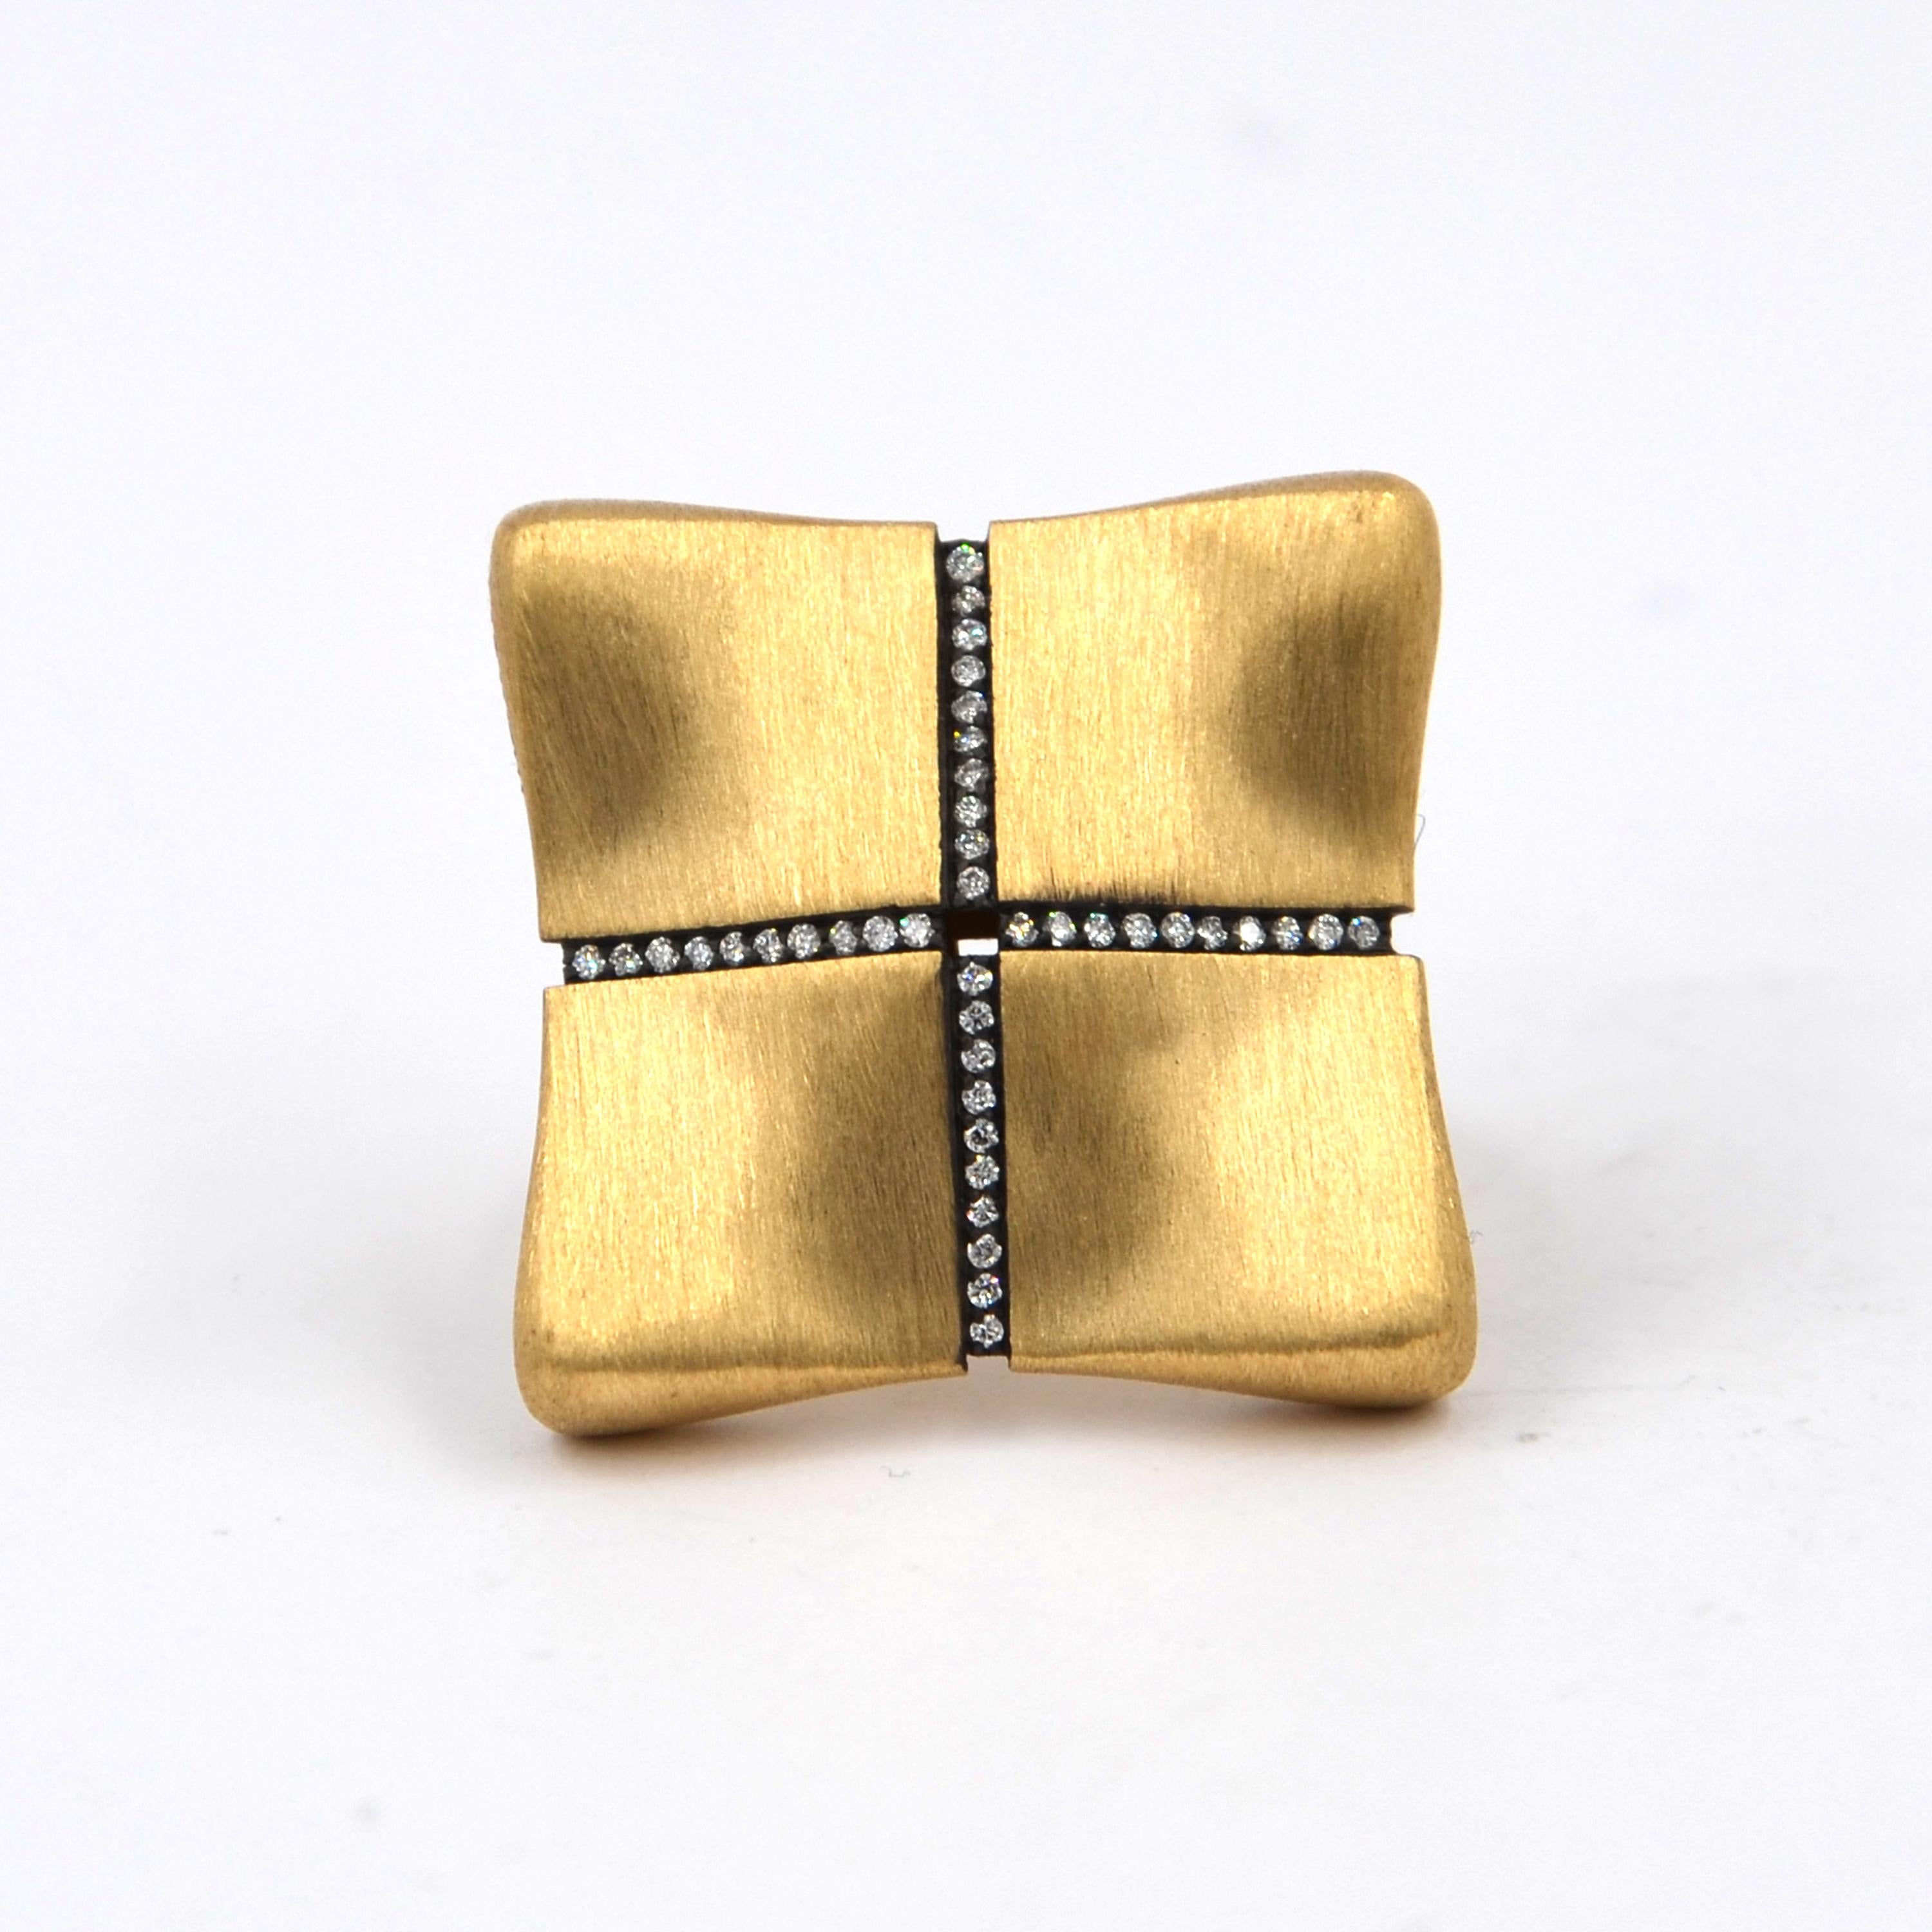 Garavelli 18 Karat Yellow Gold White Diamonds Award Collection Ring 3